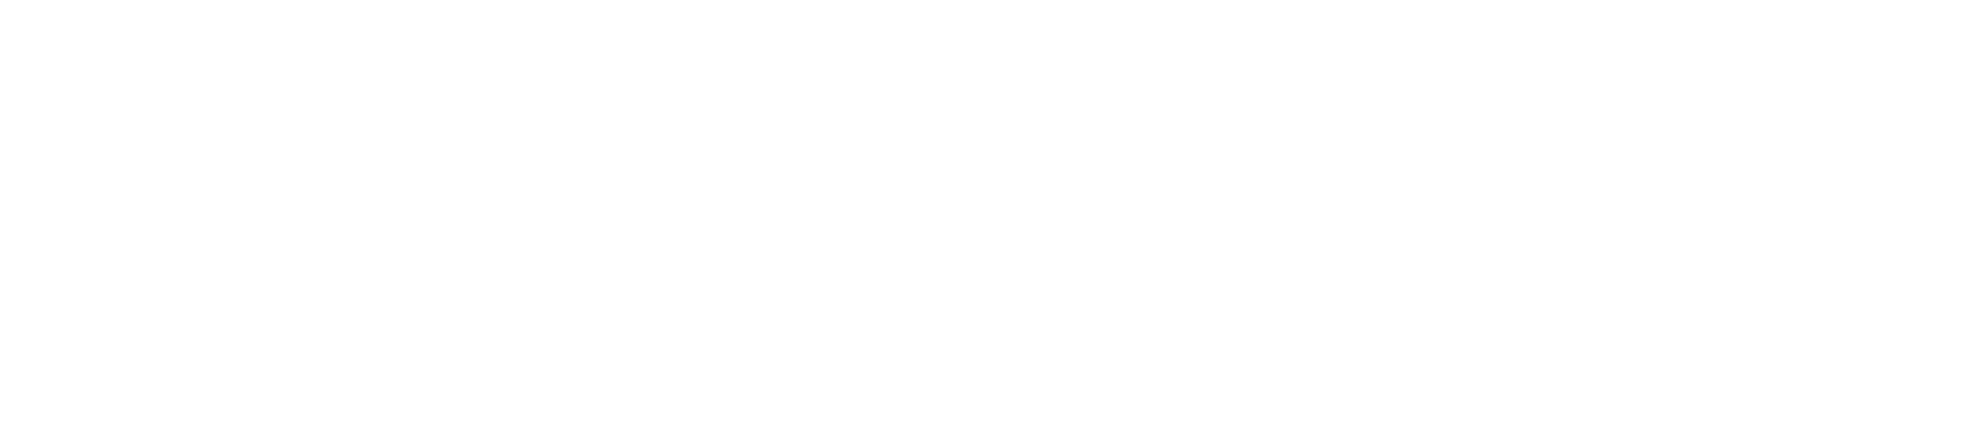 GoLucky 喜运达 | 打造高效稳定的亚洲物流网络